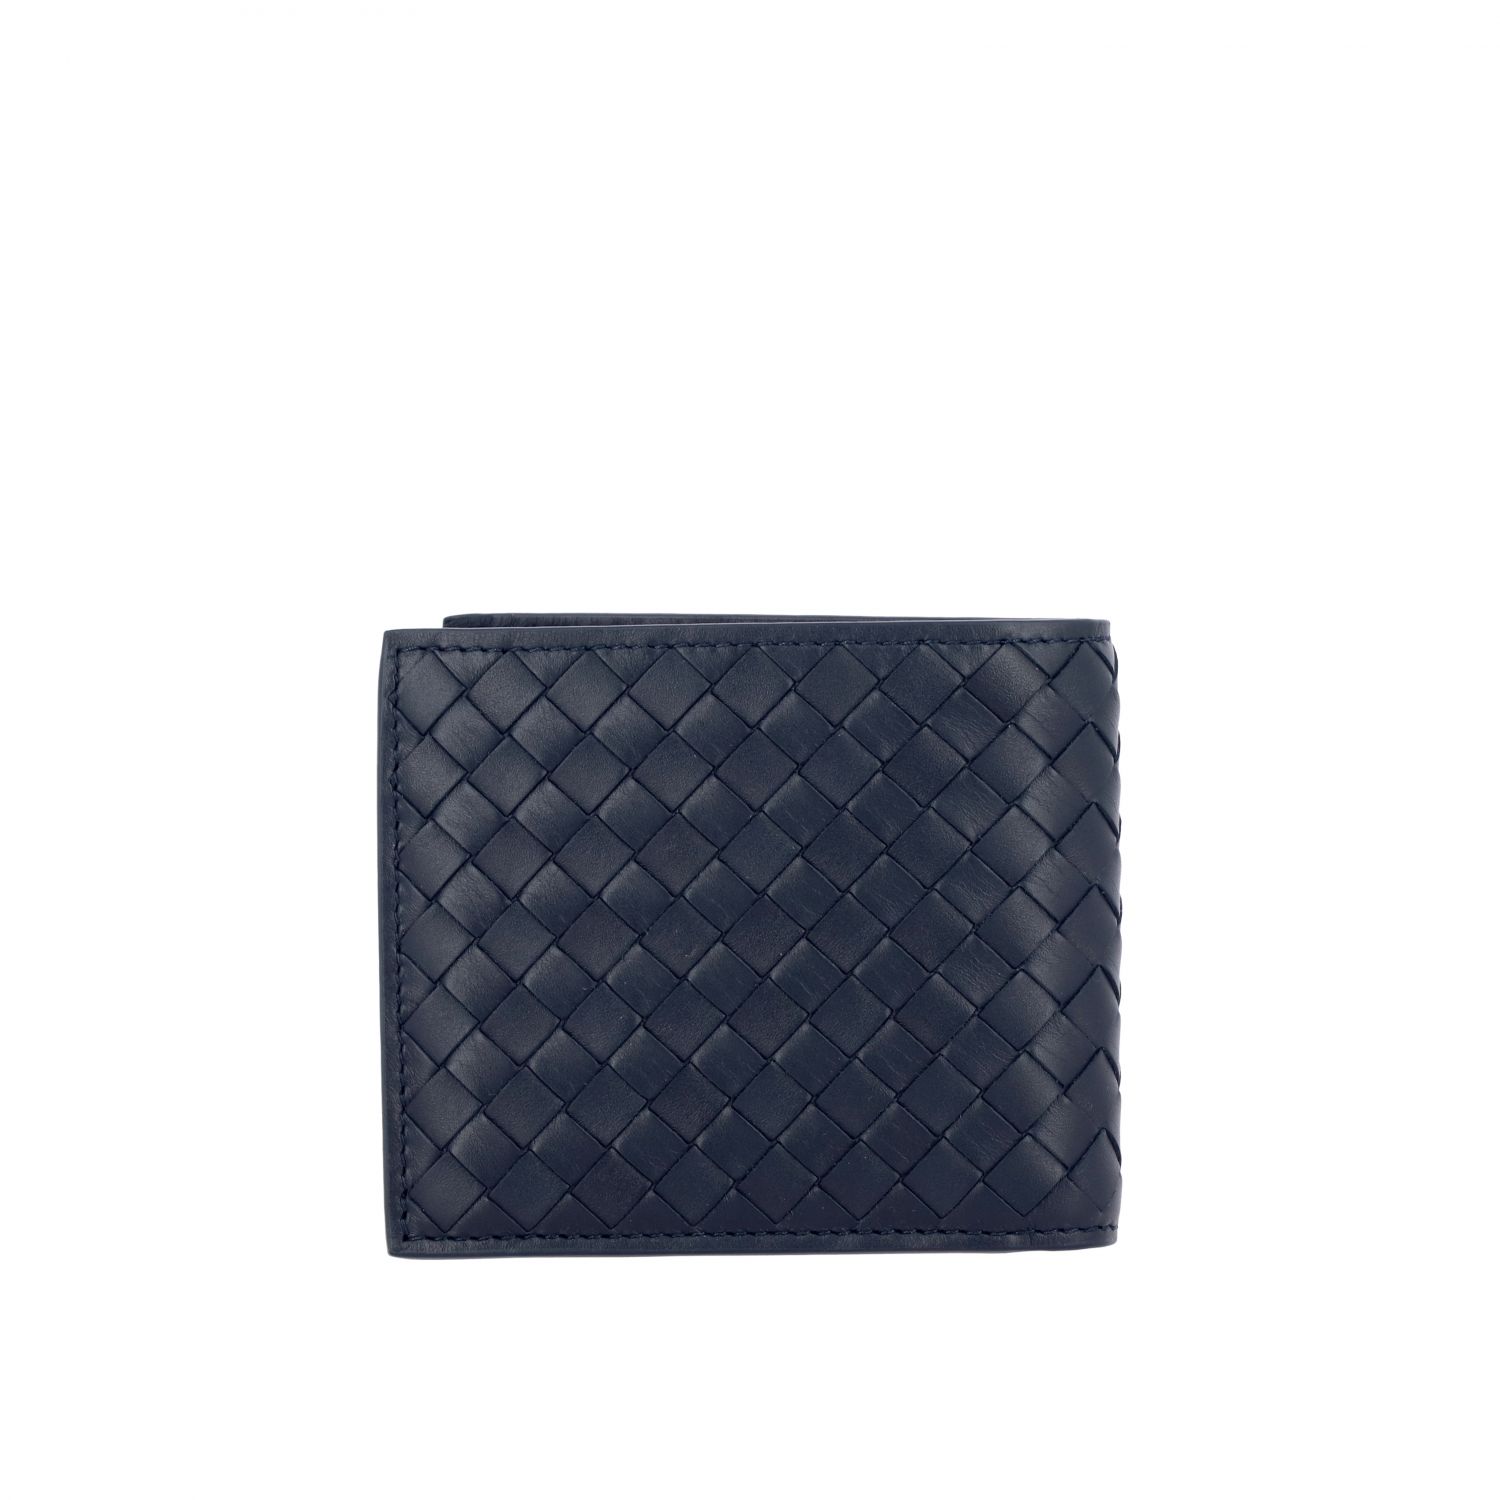 Bottega Veneta Outlet: wallet in woven leather - Navy | Bottega Veneta ...